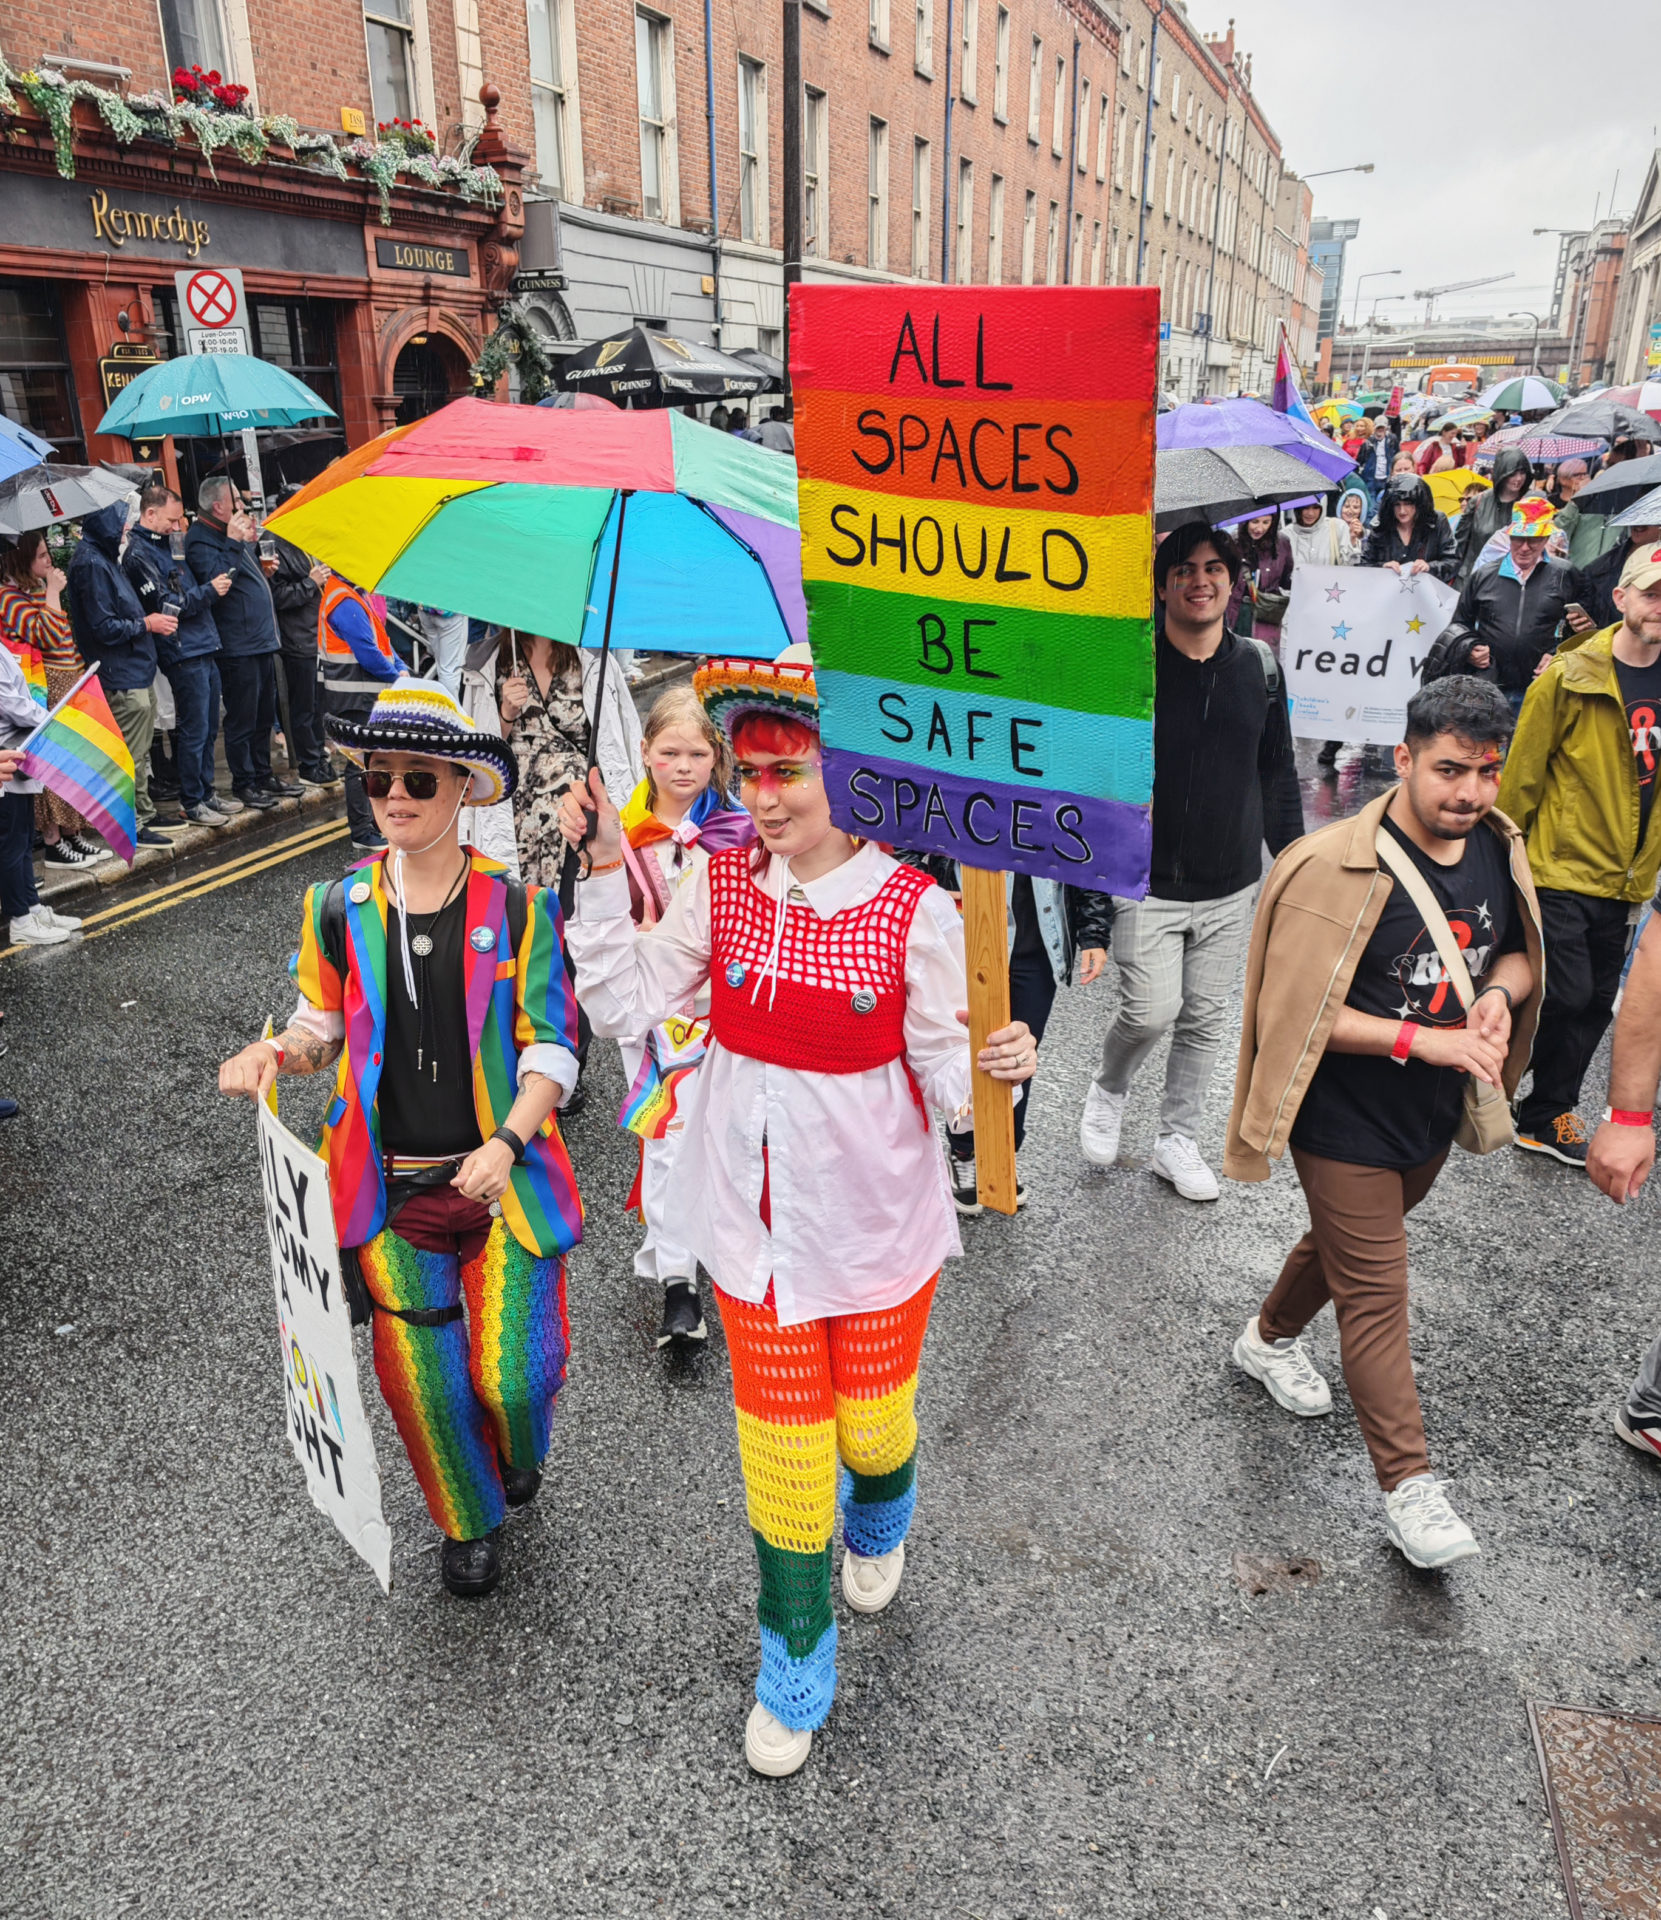 The 50th Dublin Gay Pride Parade makes its way down Westland Row, Dublin, today. Photo: Eamonn Farrell/© RollingNews.ie